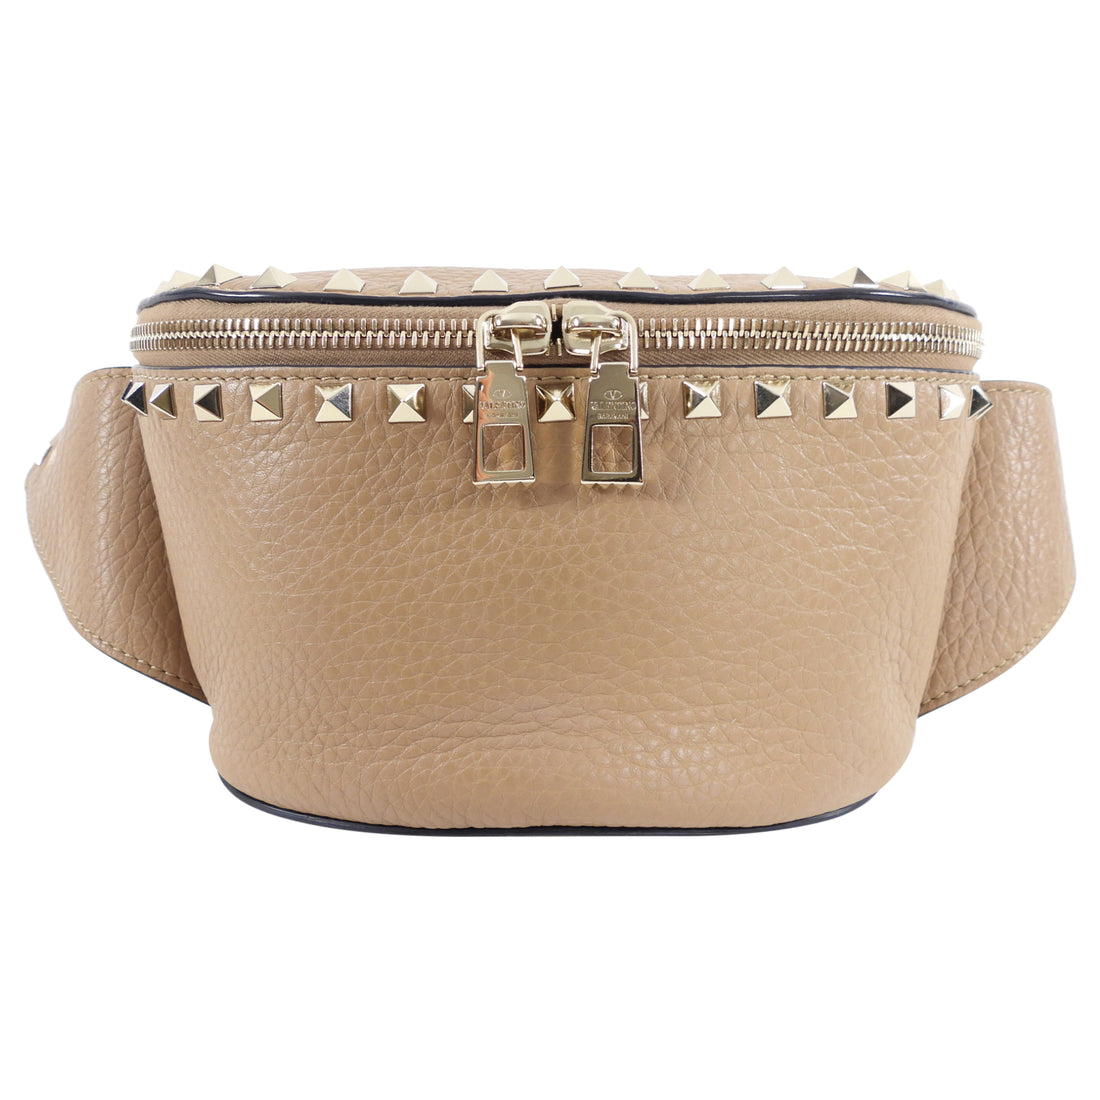 Valentino Rockstud Belt Bag Handbag - Authentic Pre-Owned Designer Handbags